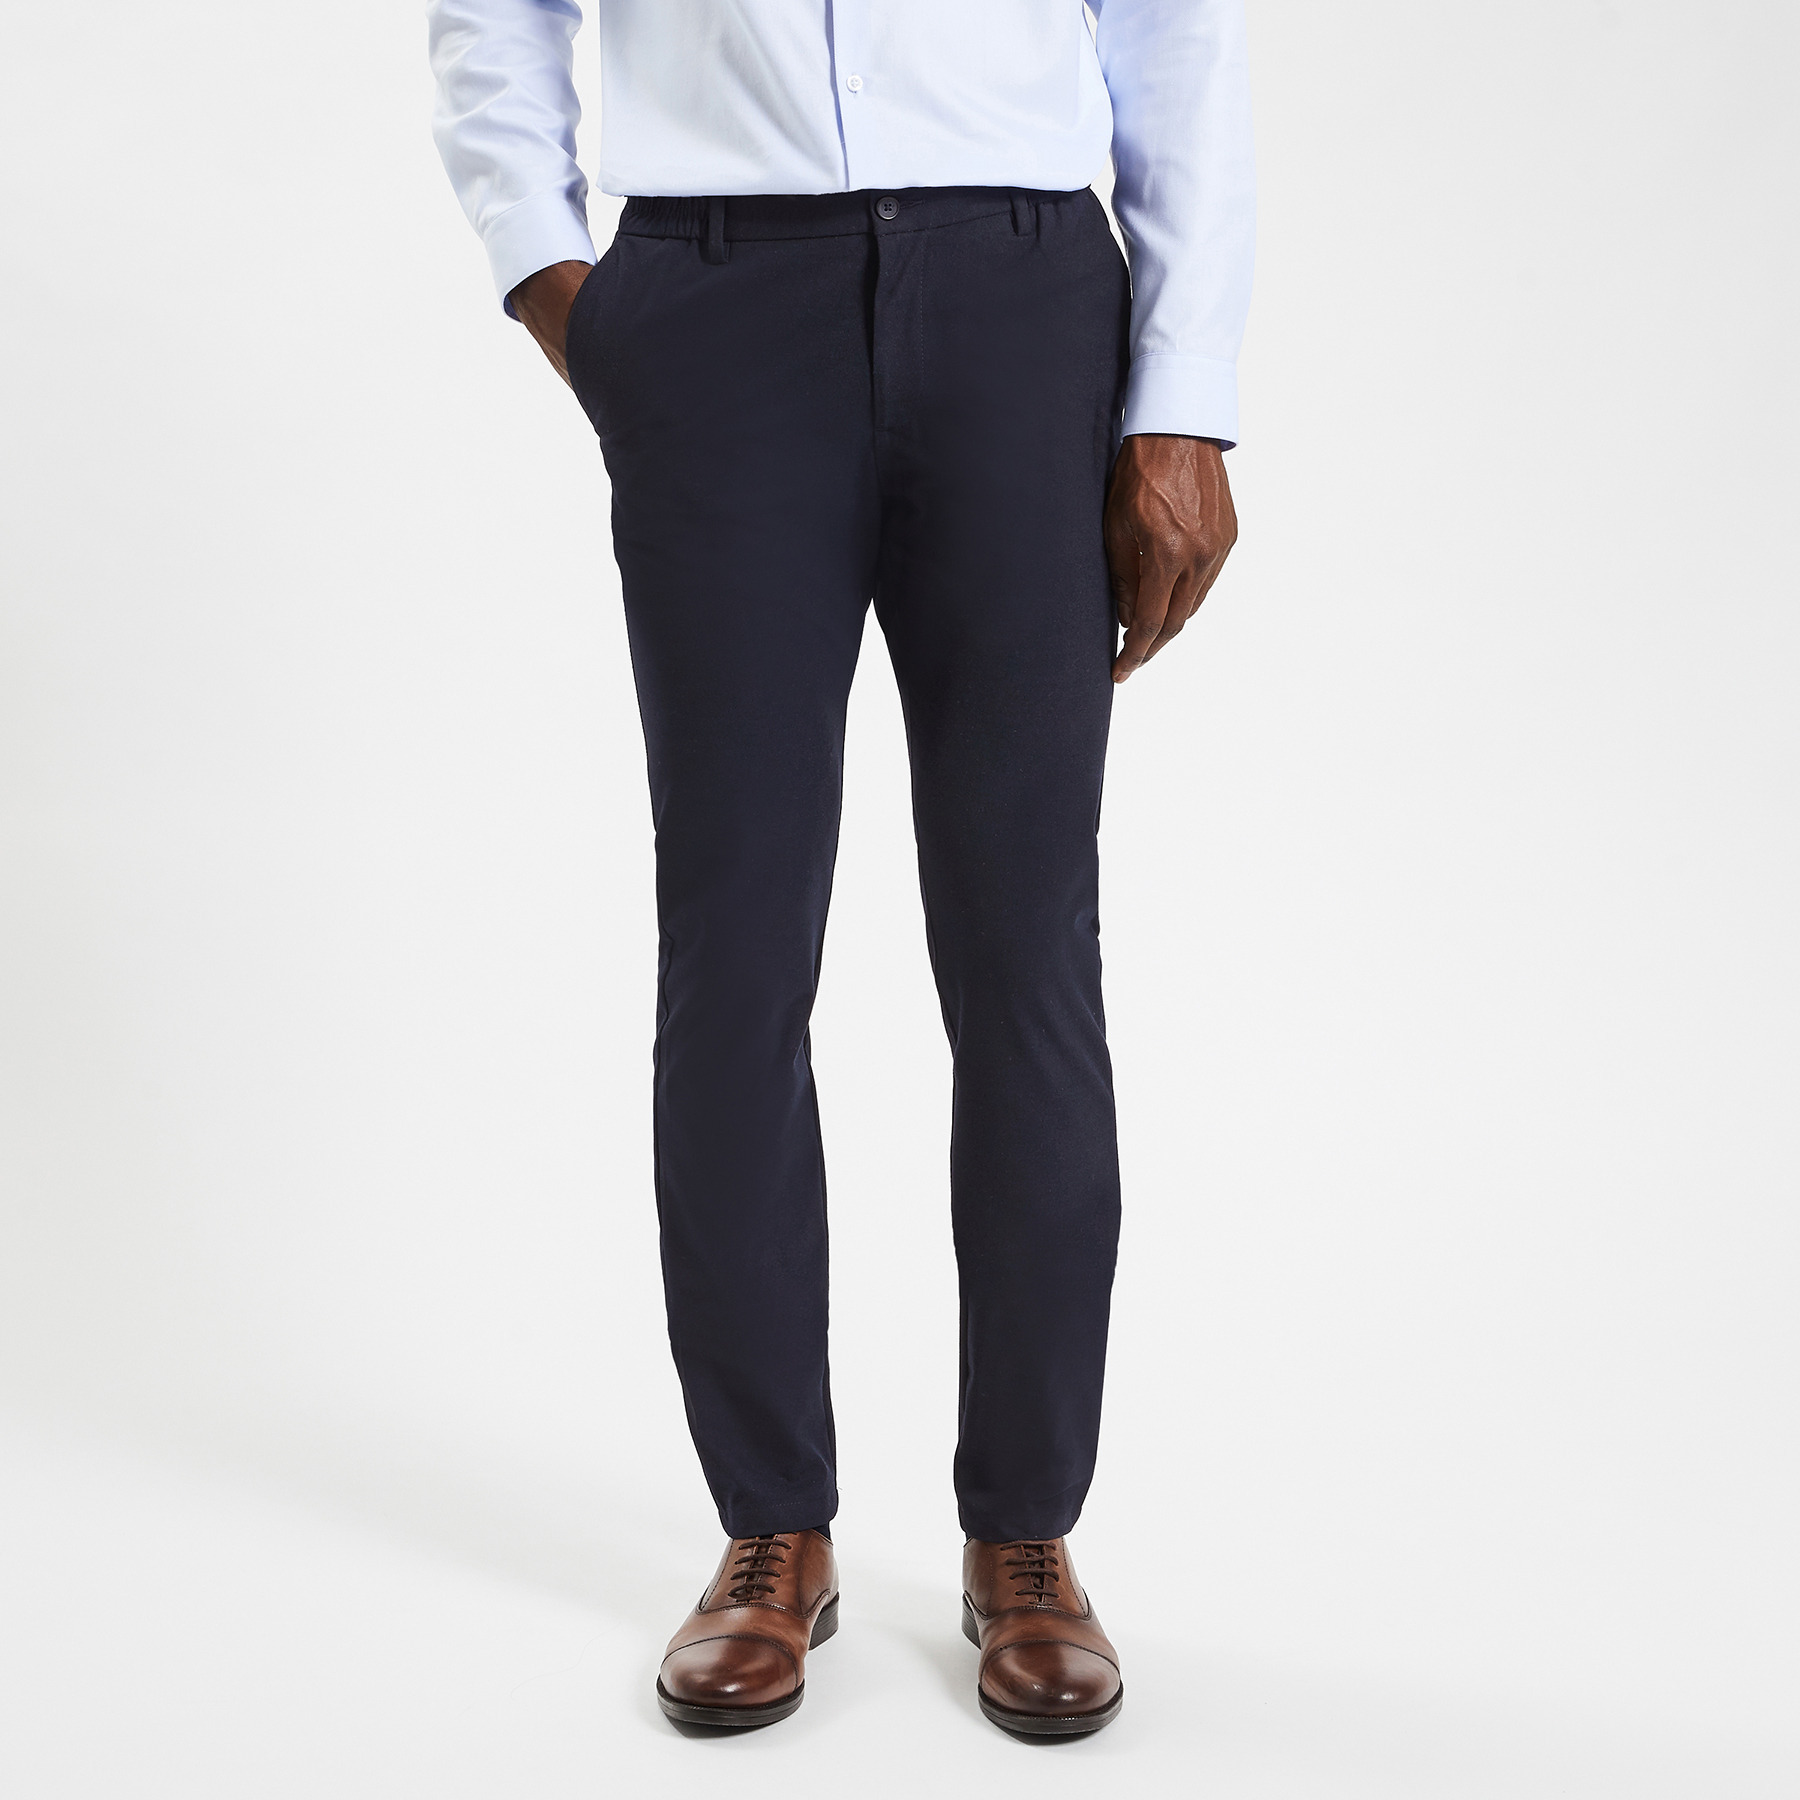 Pantalon slim chino bi stretch taille élastiquée Bleu 36 67% Polyester, 29% Viscose, 4% Elasthanne Homme